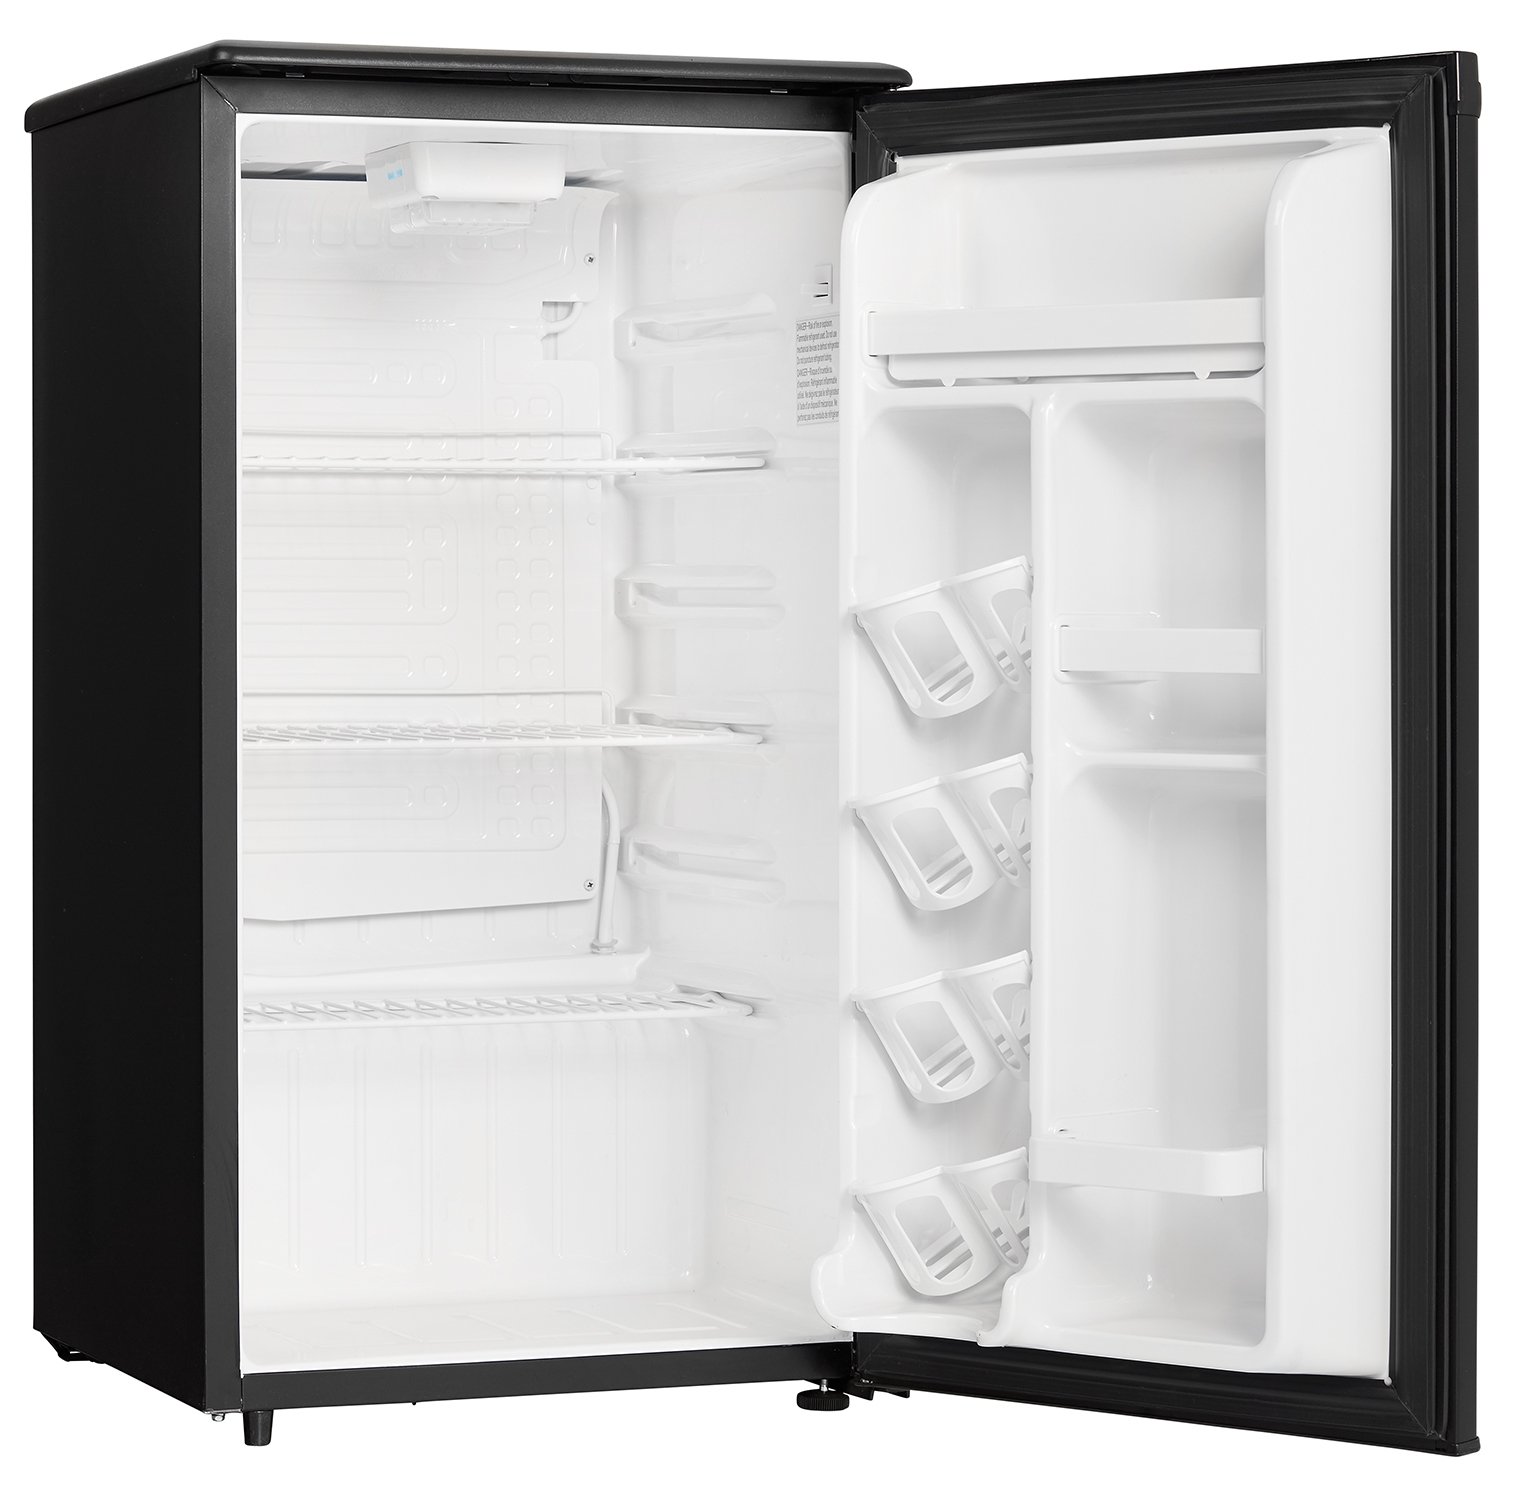 3.3 Cu. Ft. Danby Compact Refrigerator - Black